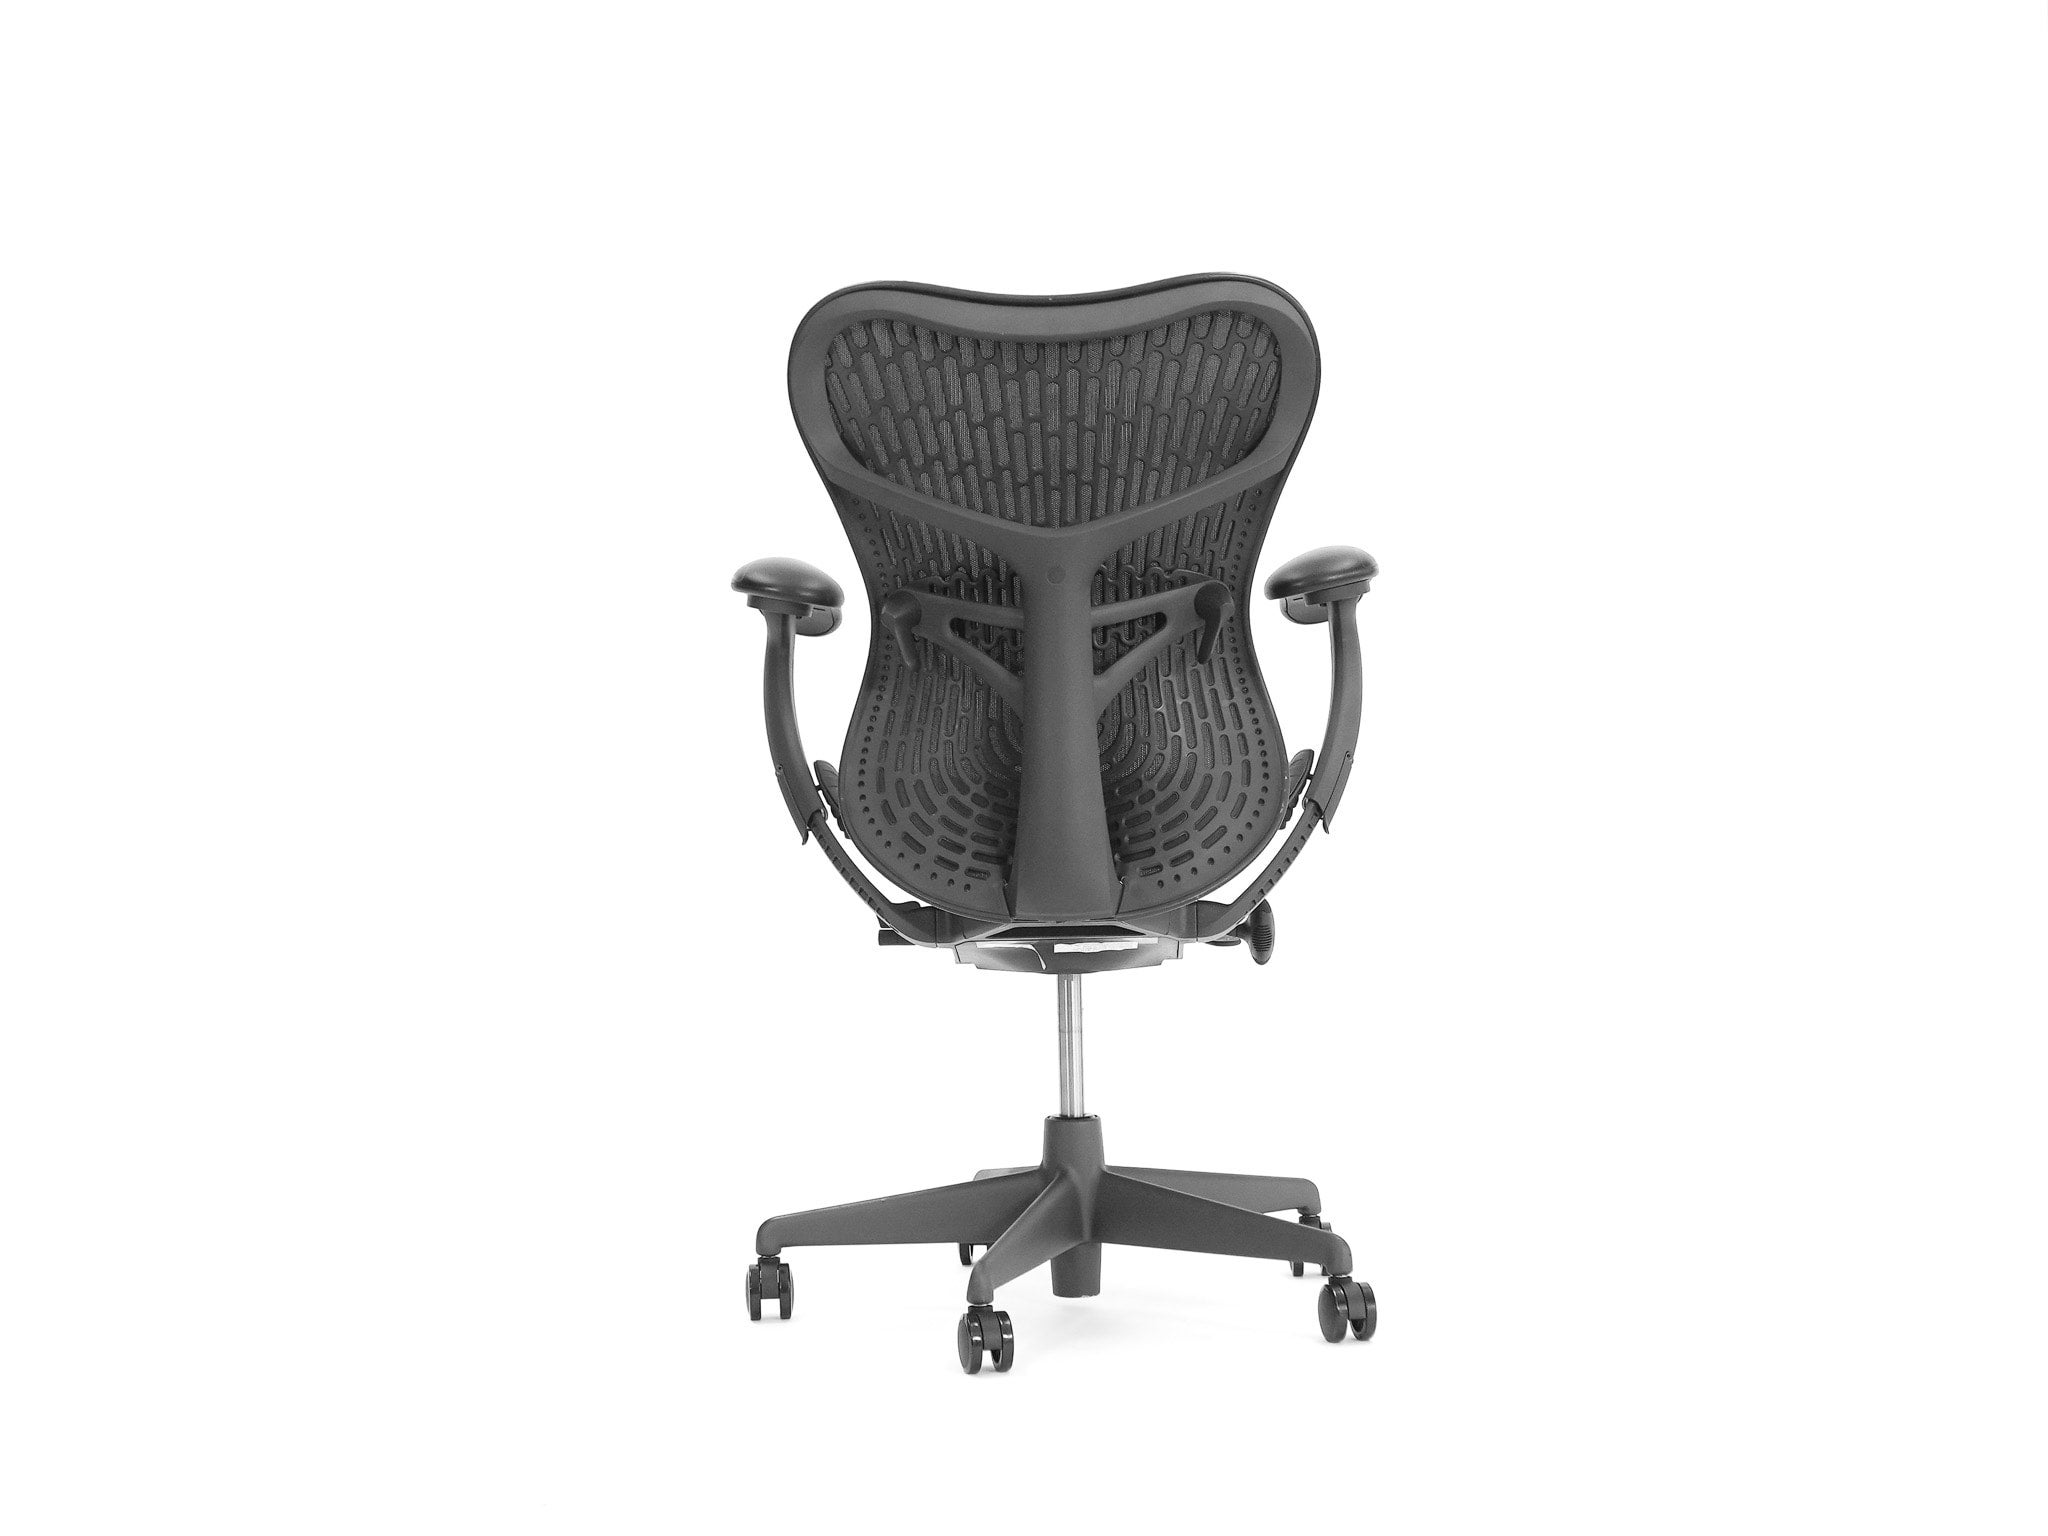 Herman Miller Mirra 2 Office Chair: Ergonomic Design for Comfort 